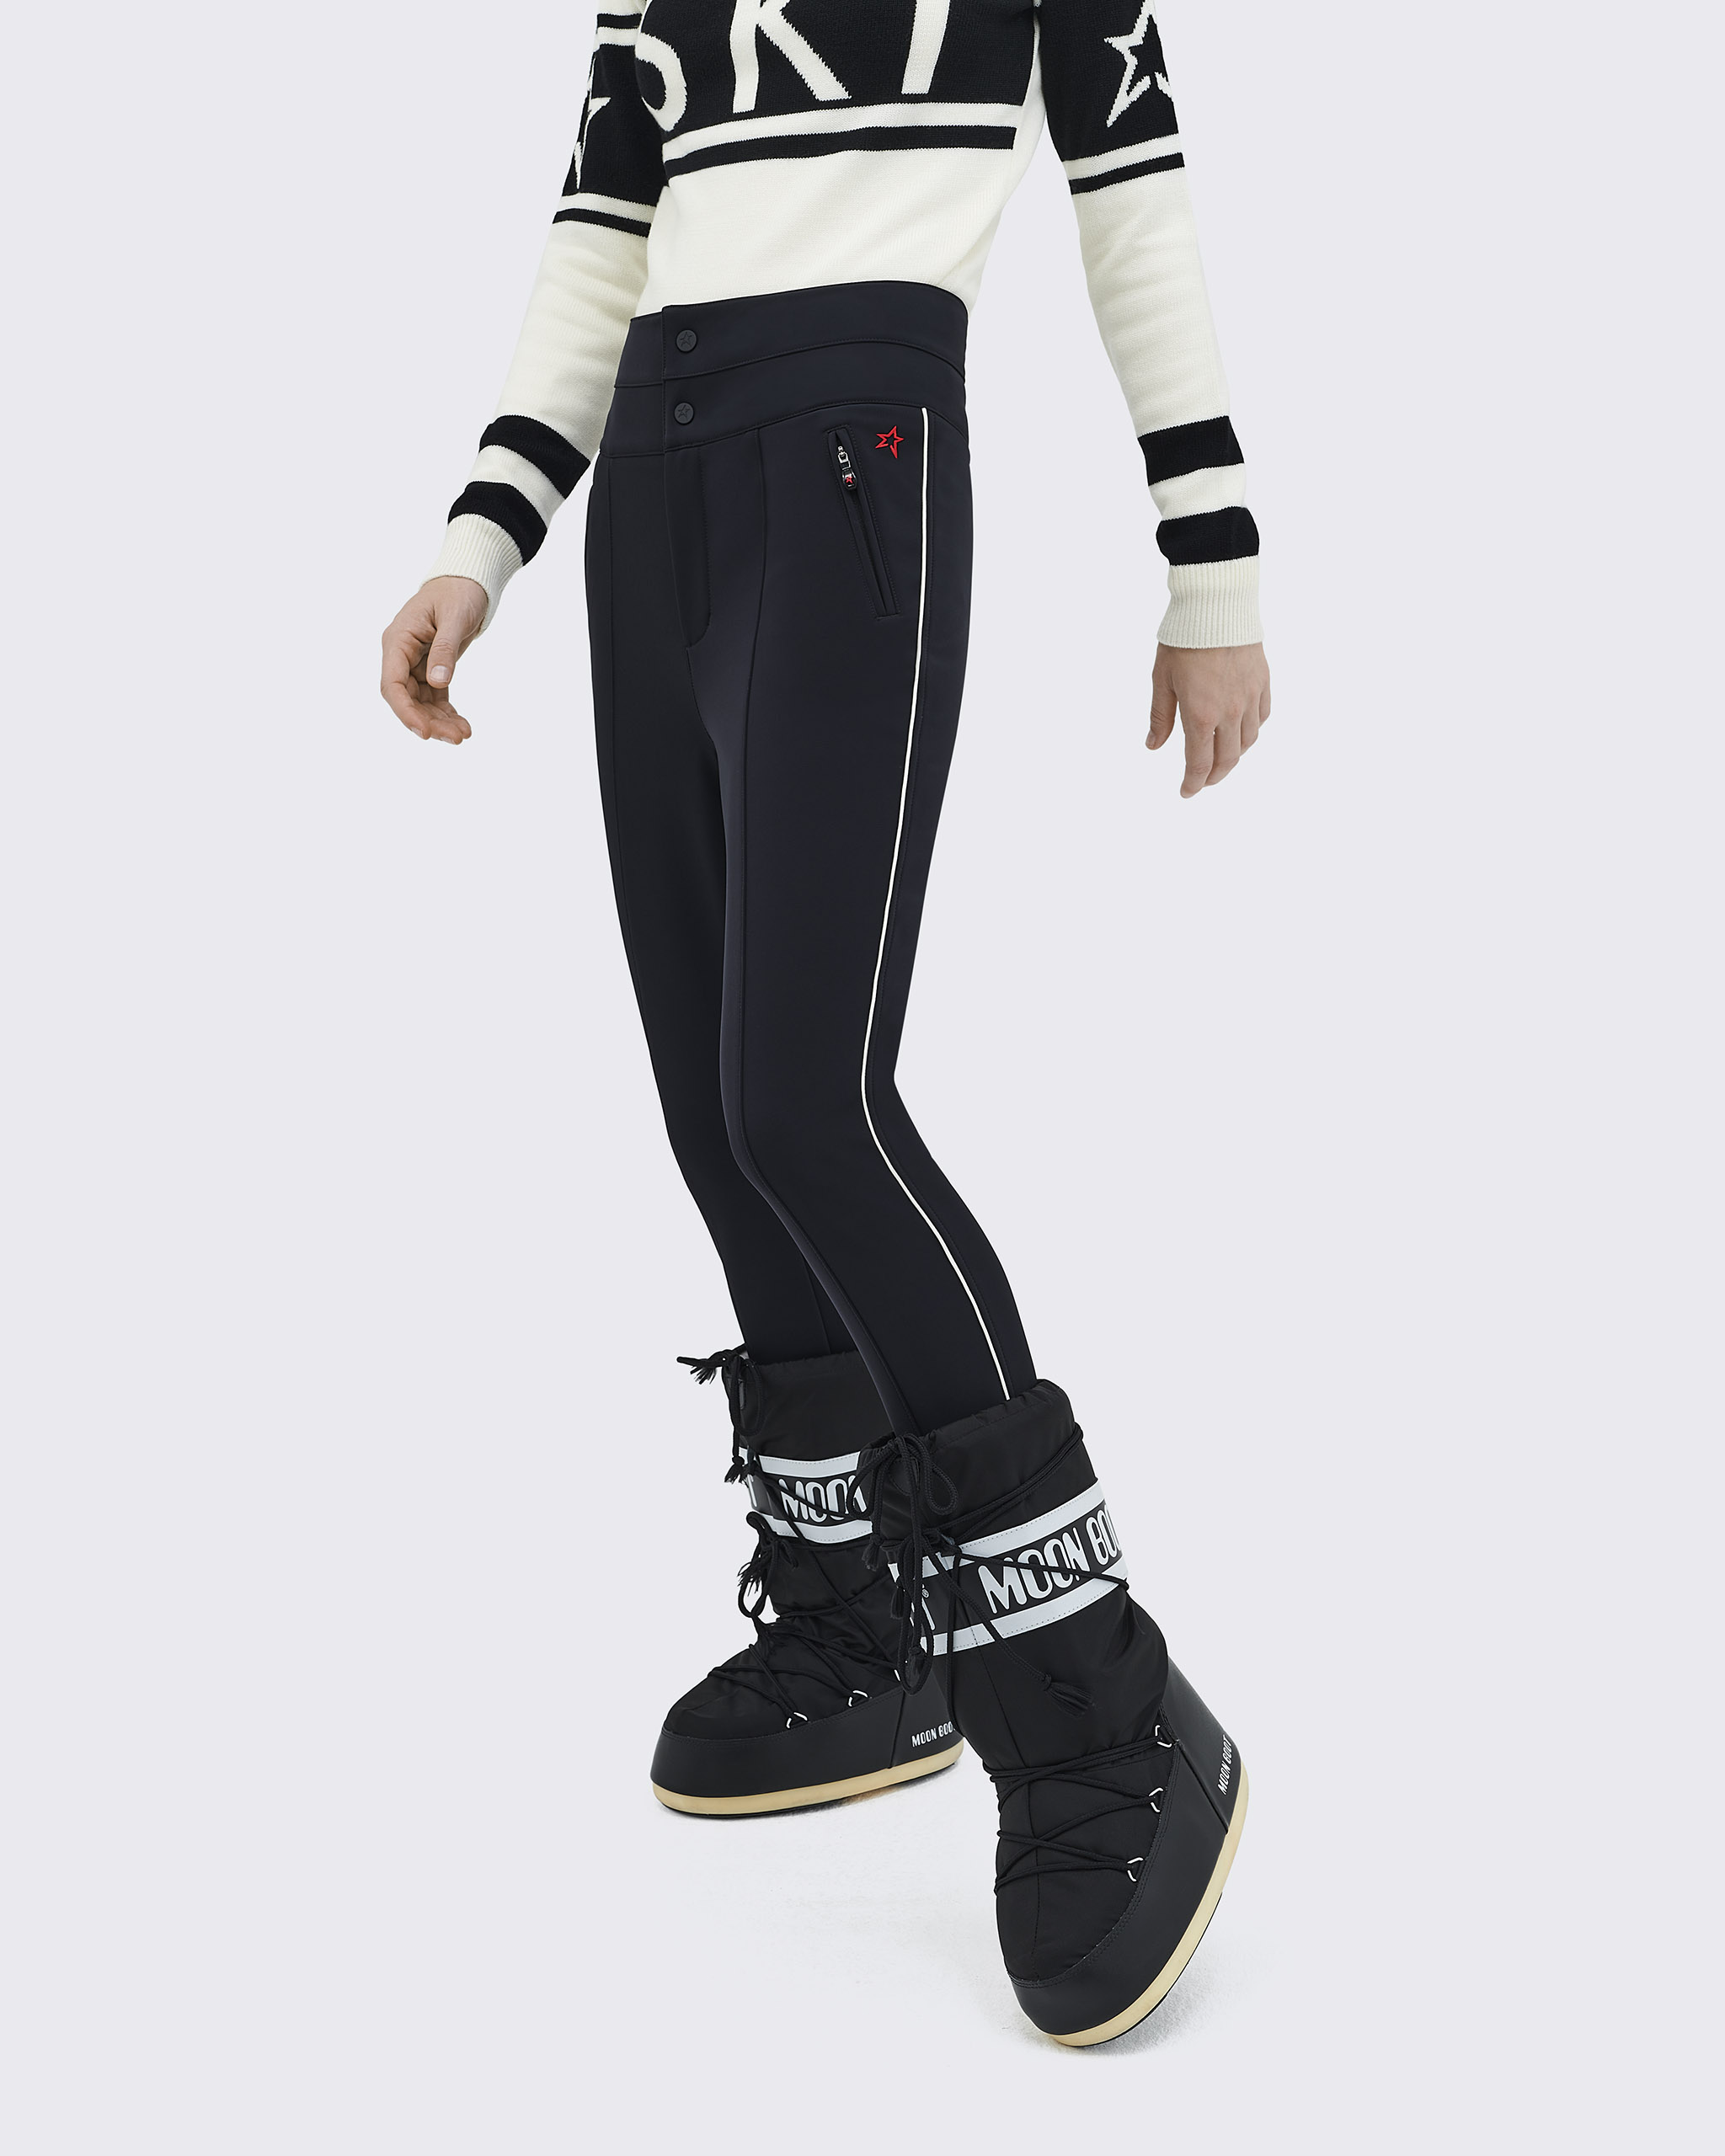 PERFECT MOMENT Aurora Skinny ski pants W3000857-1703black